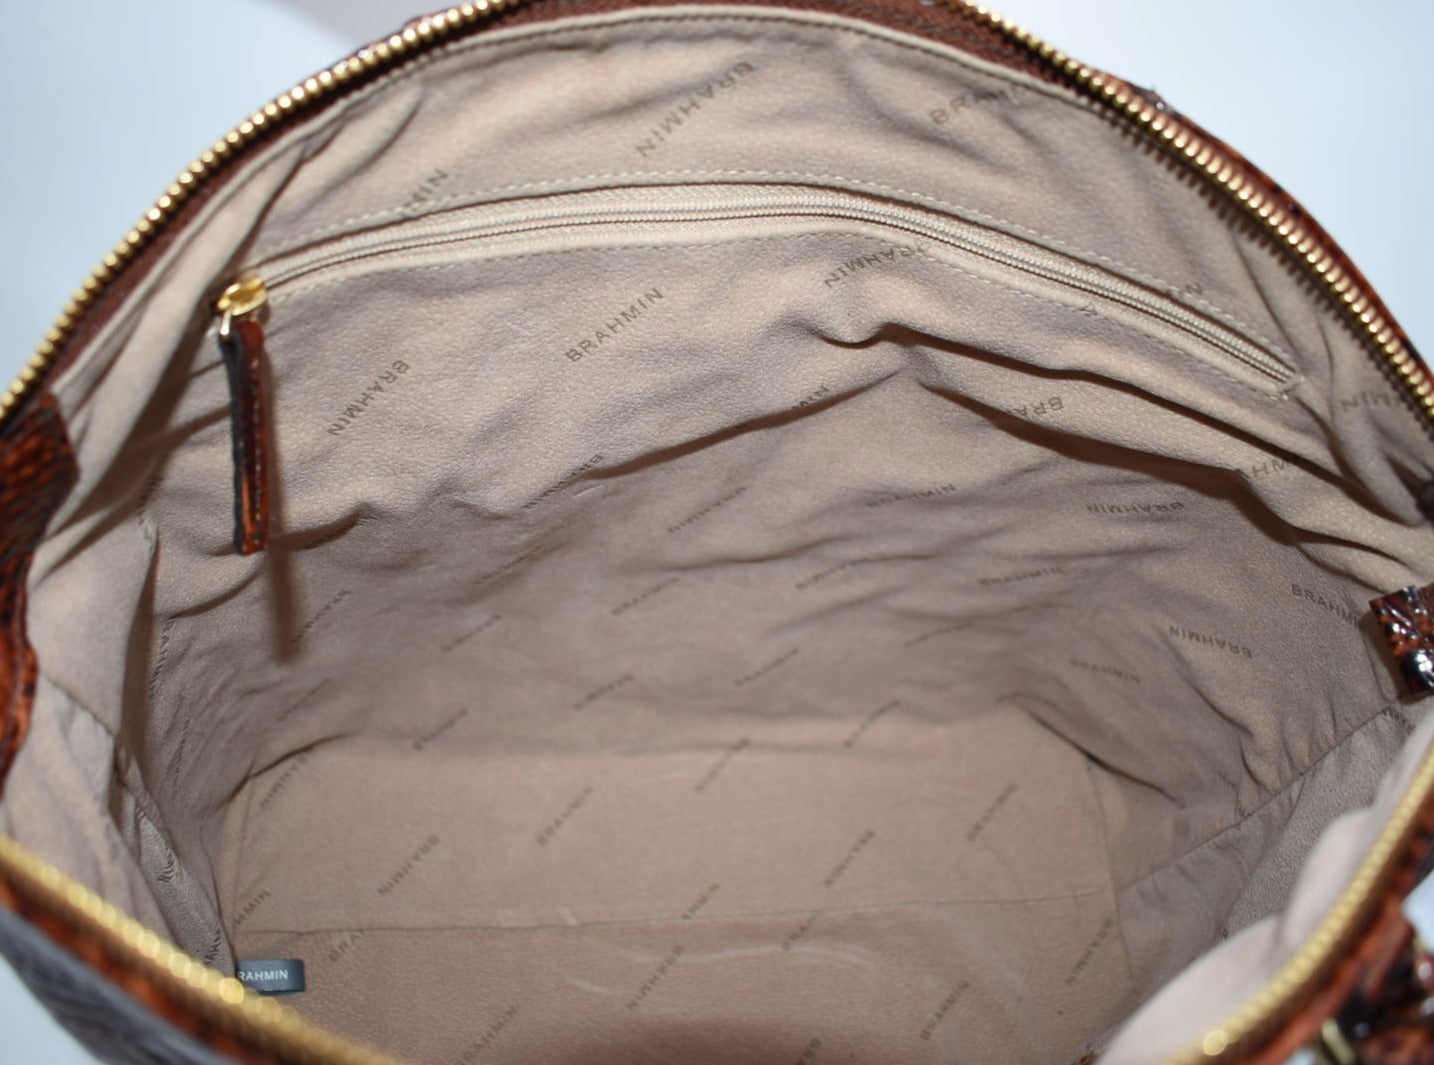 Brahmin Large Duxbury Satchel Bag in Pecan Melbourne